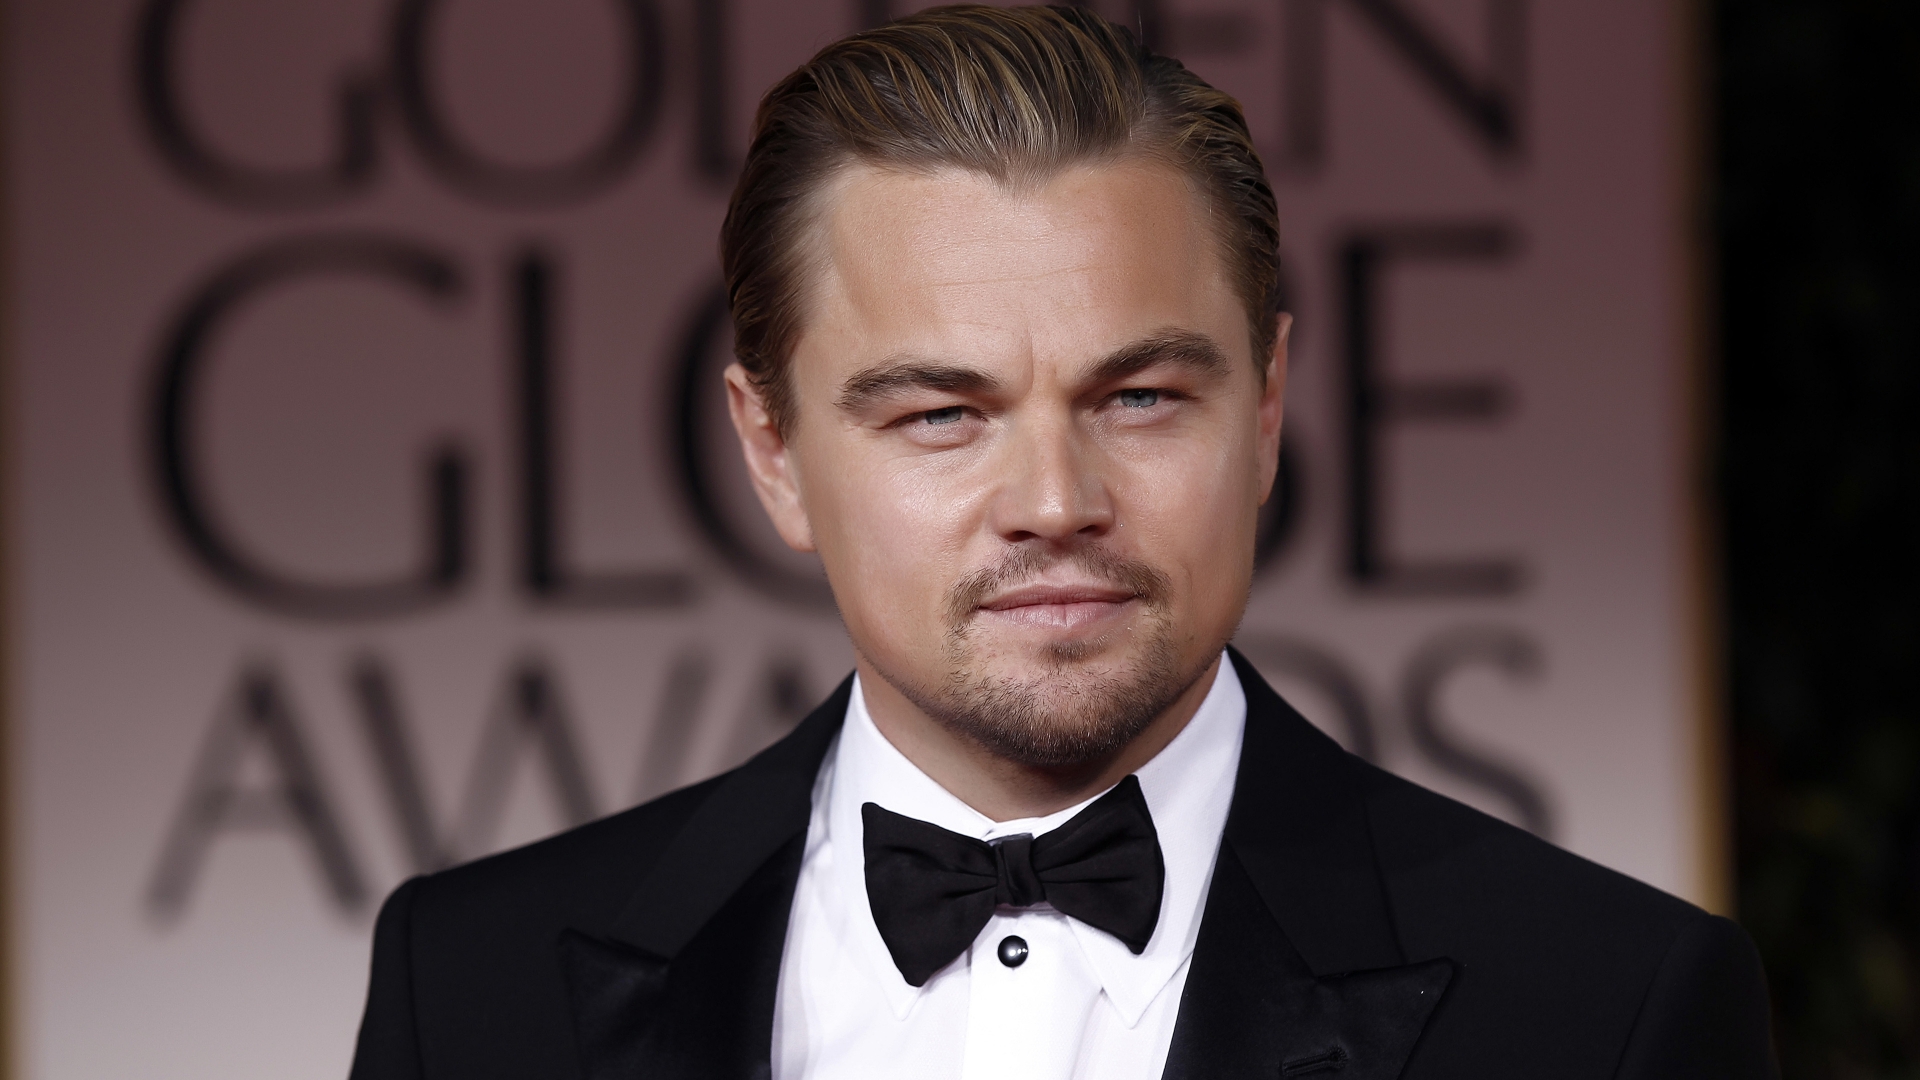 Leonardo DiCaprio in Tuxedo for 1920 x 1080 HDTV 1080p resolution